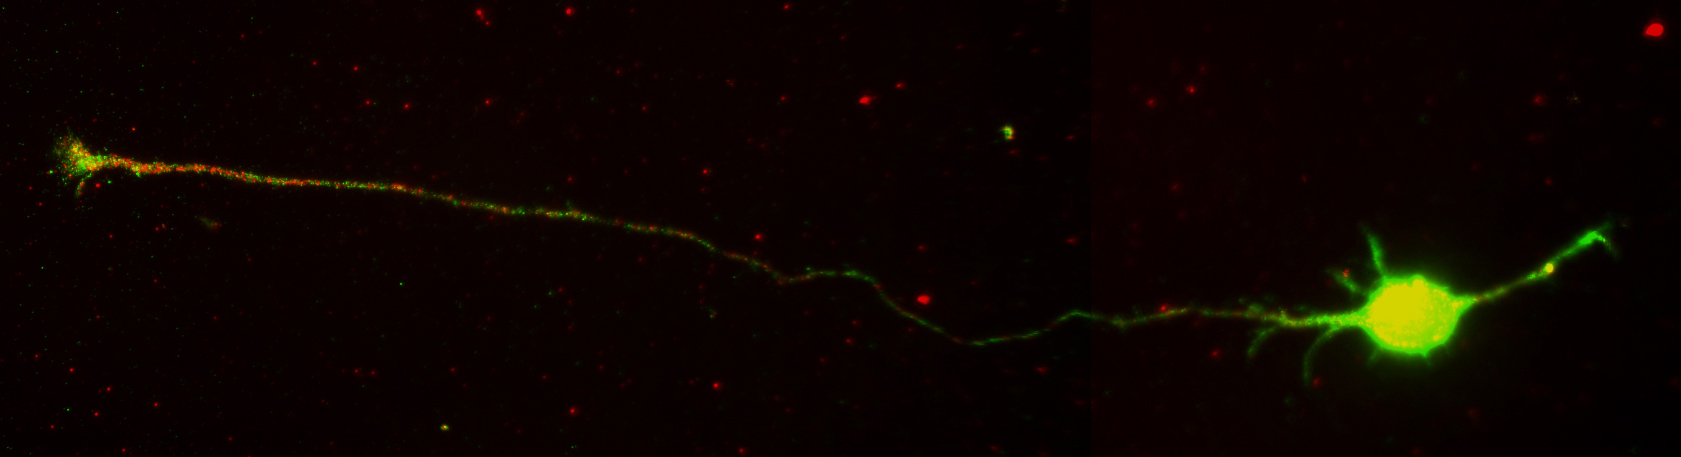 Hippocampal neuron